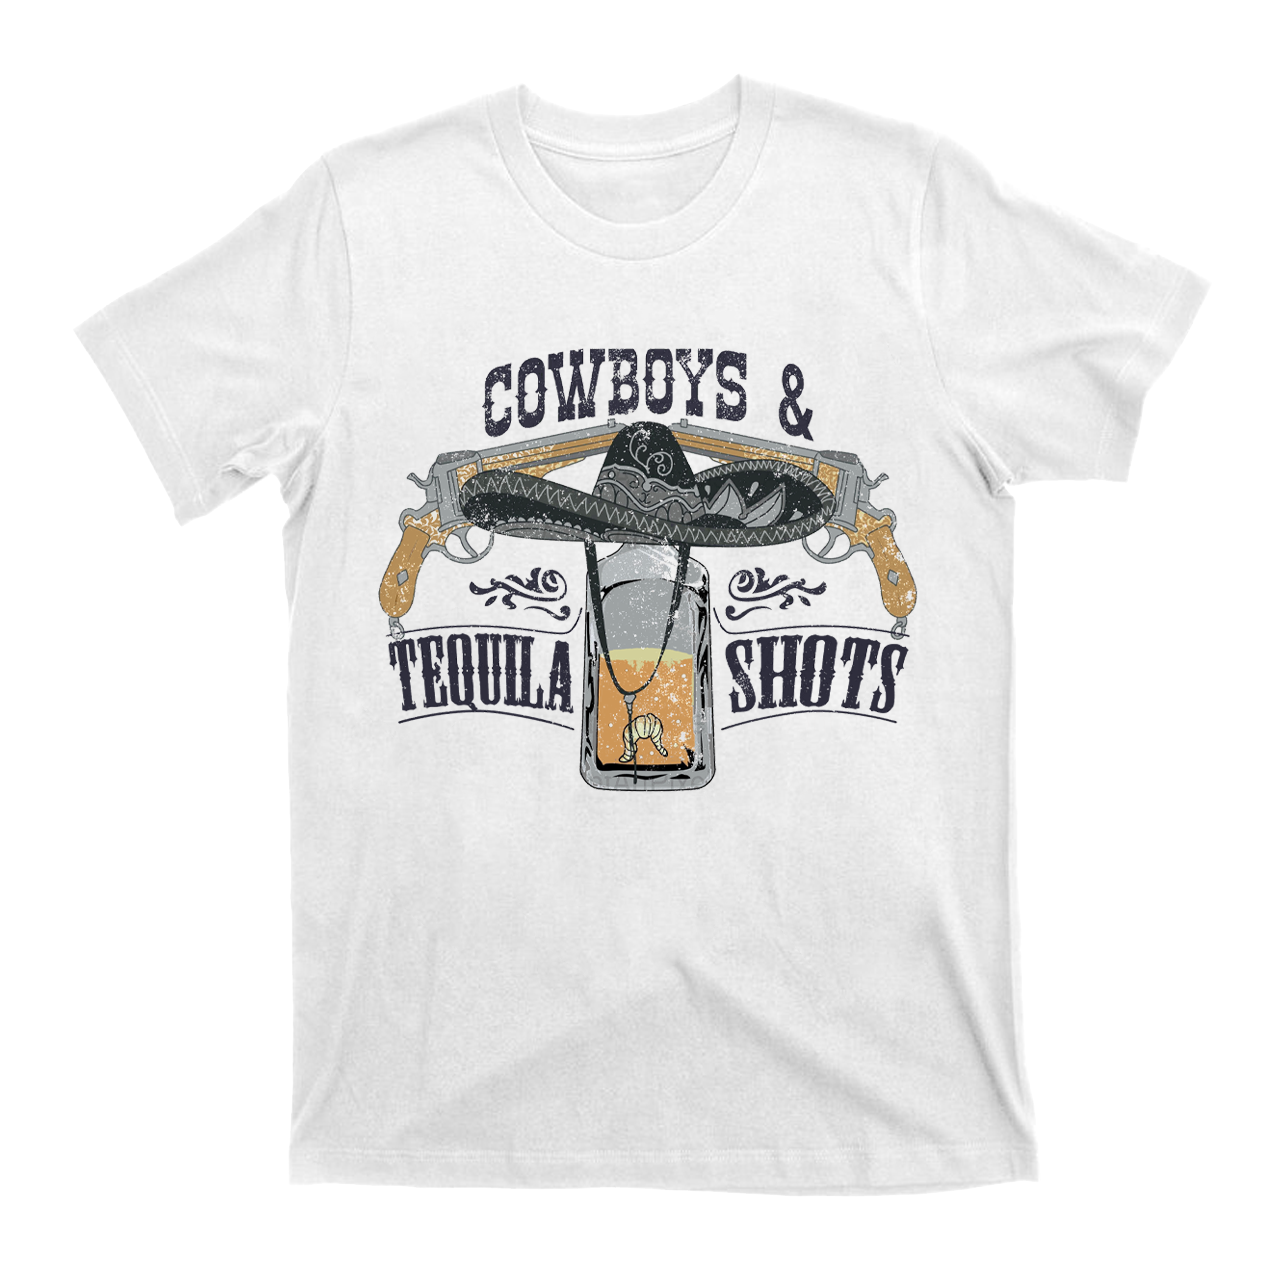 Cowboys&Tequila Shots T-Shirts